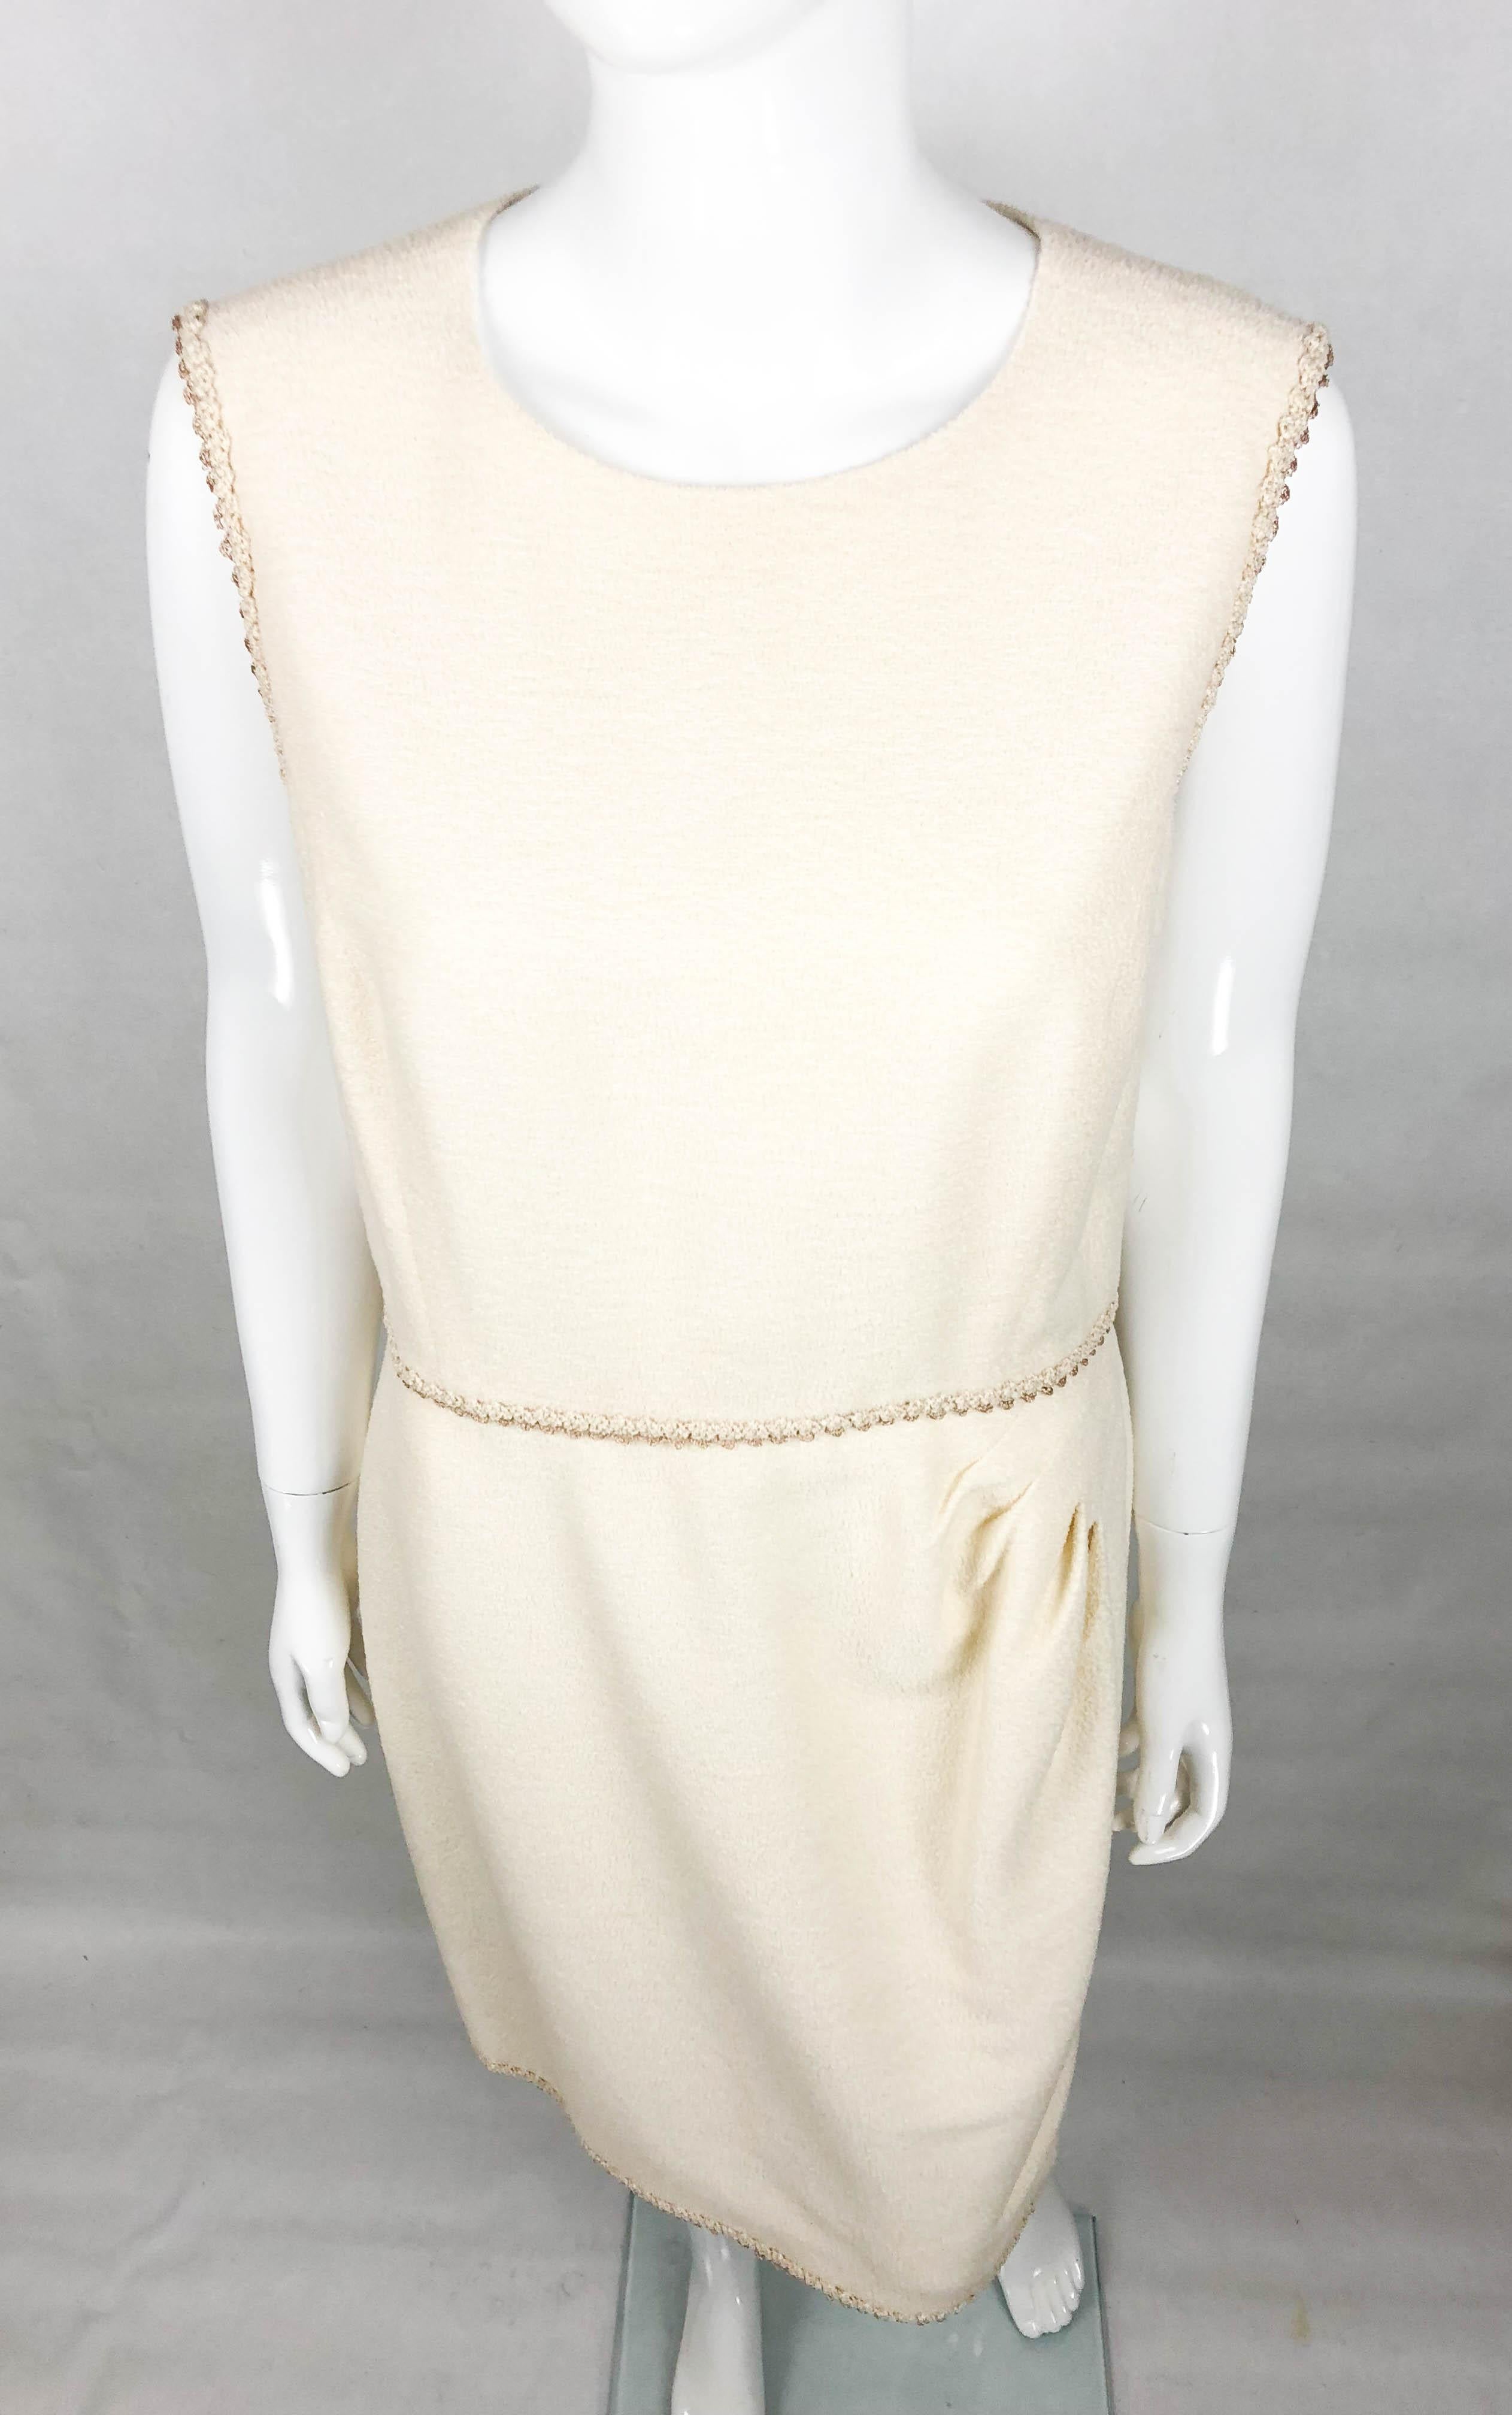 Women's 2010 Unworn Chanel Runway Look Cream Dress With Gold Thread Trim For Sale